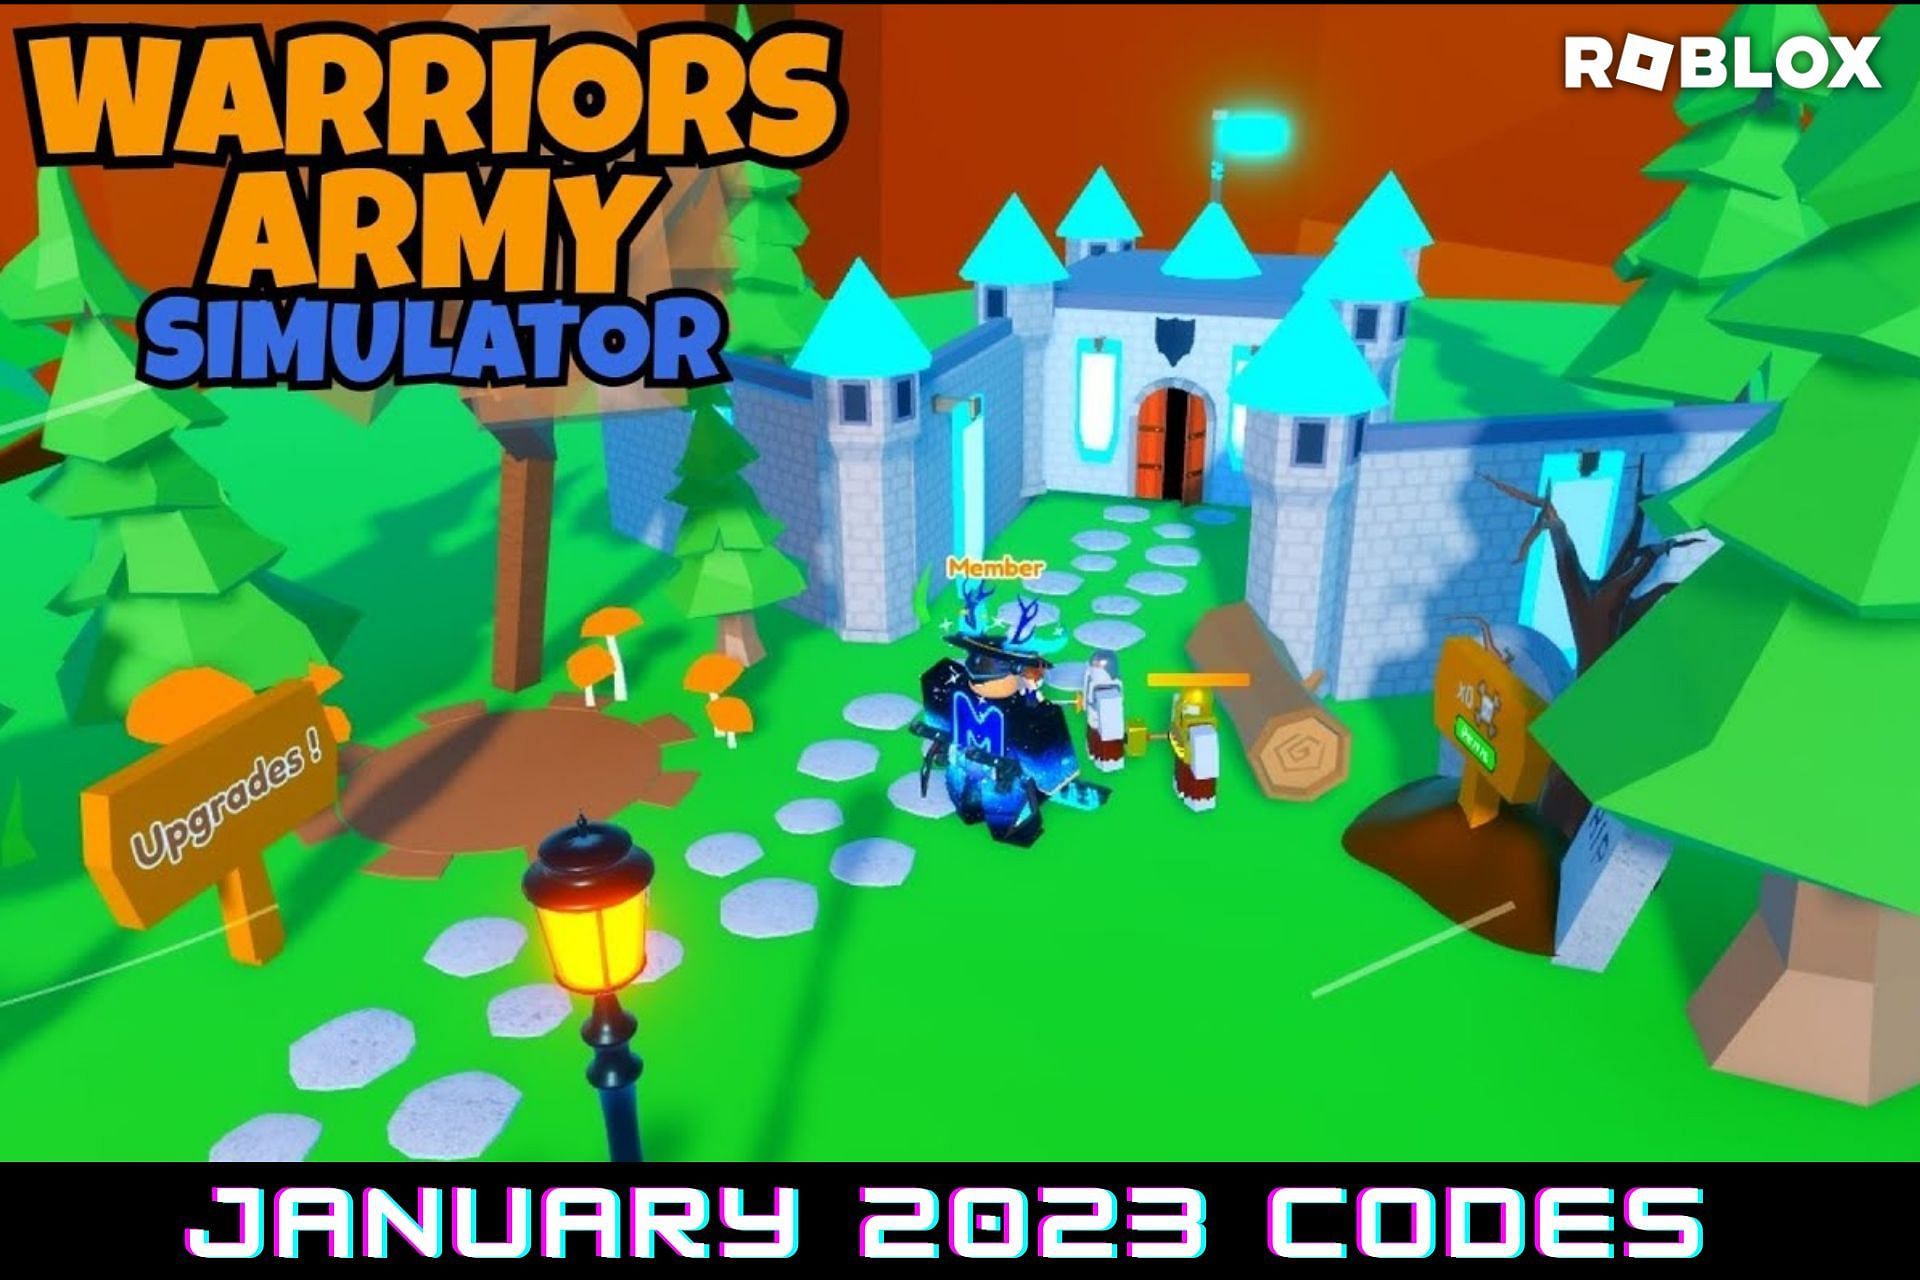 all-4-codes-warrior-simulator-2019-youtube